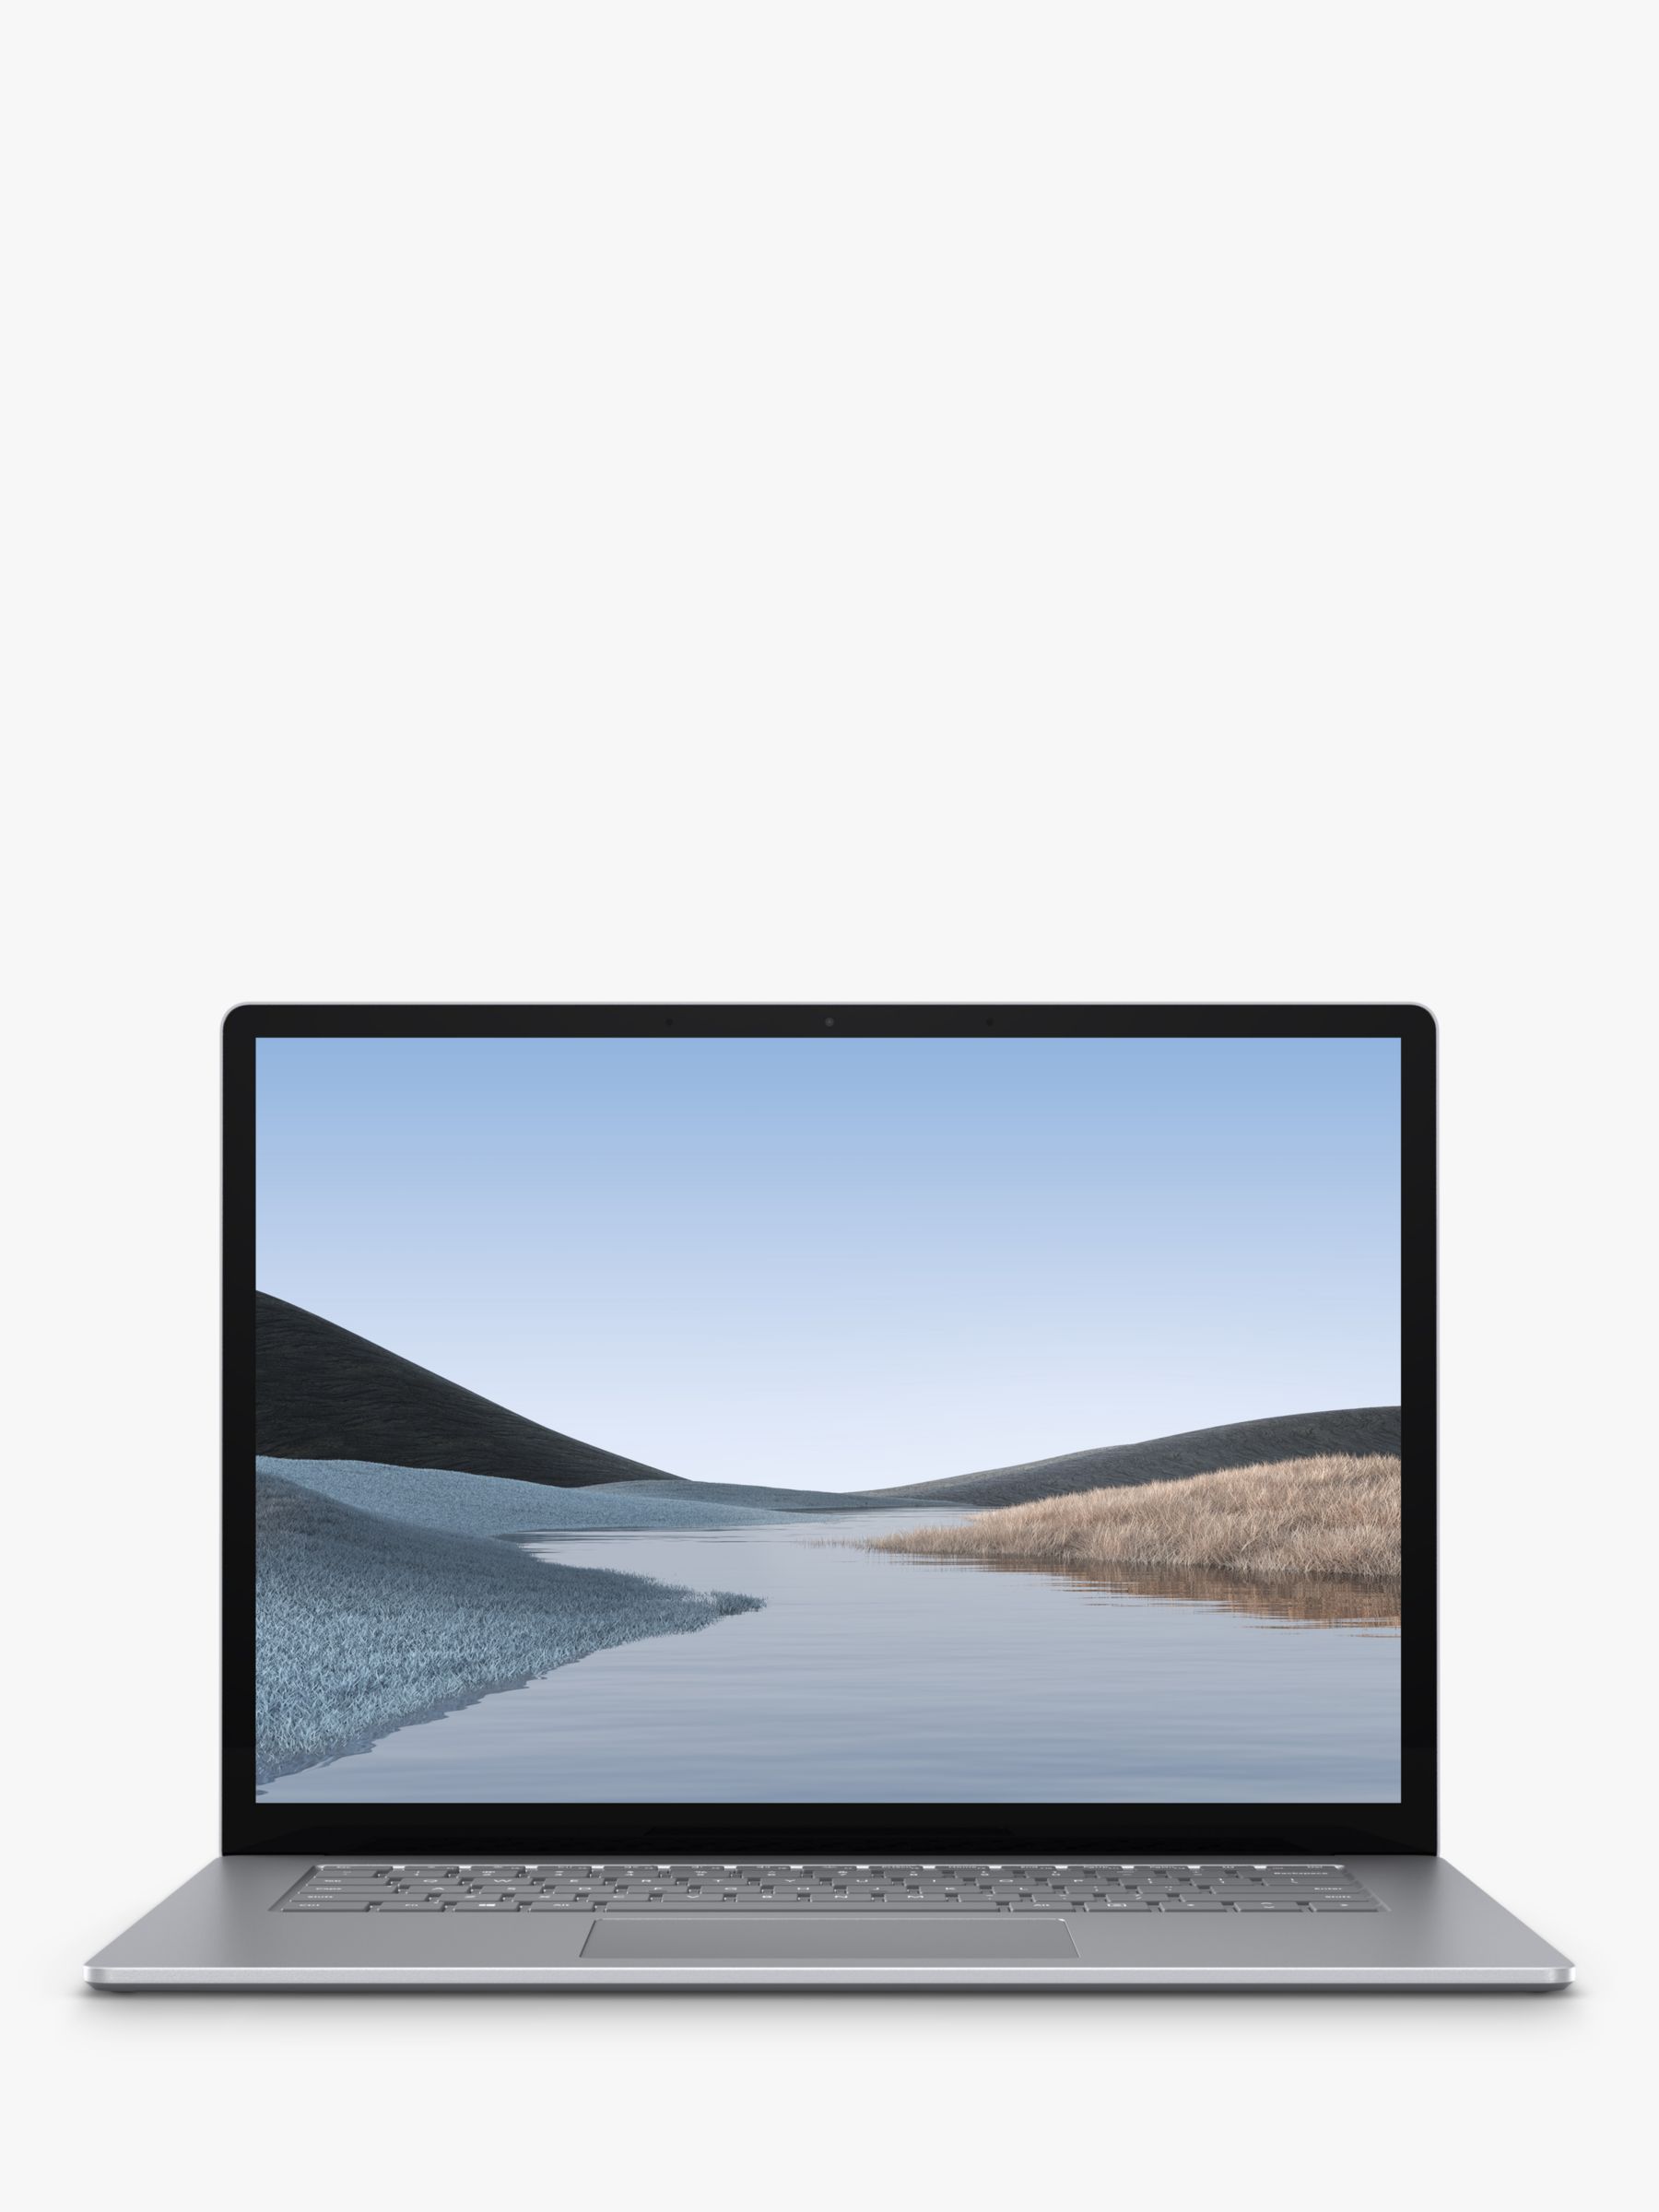 Microsoft Surface Laptop 3, AMD Ryzen 5 Processor, 8GB RAM, 128GB SSD, 15" PixelSense Display, Platinum